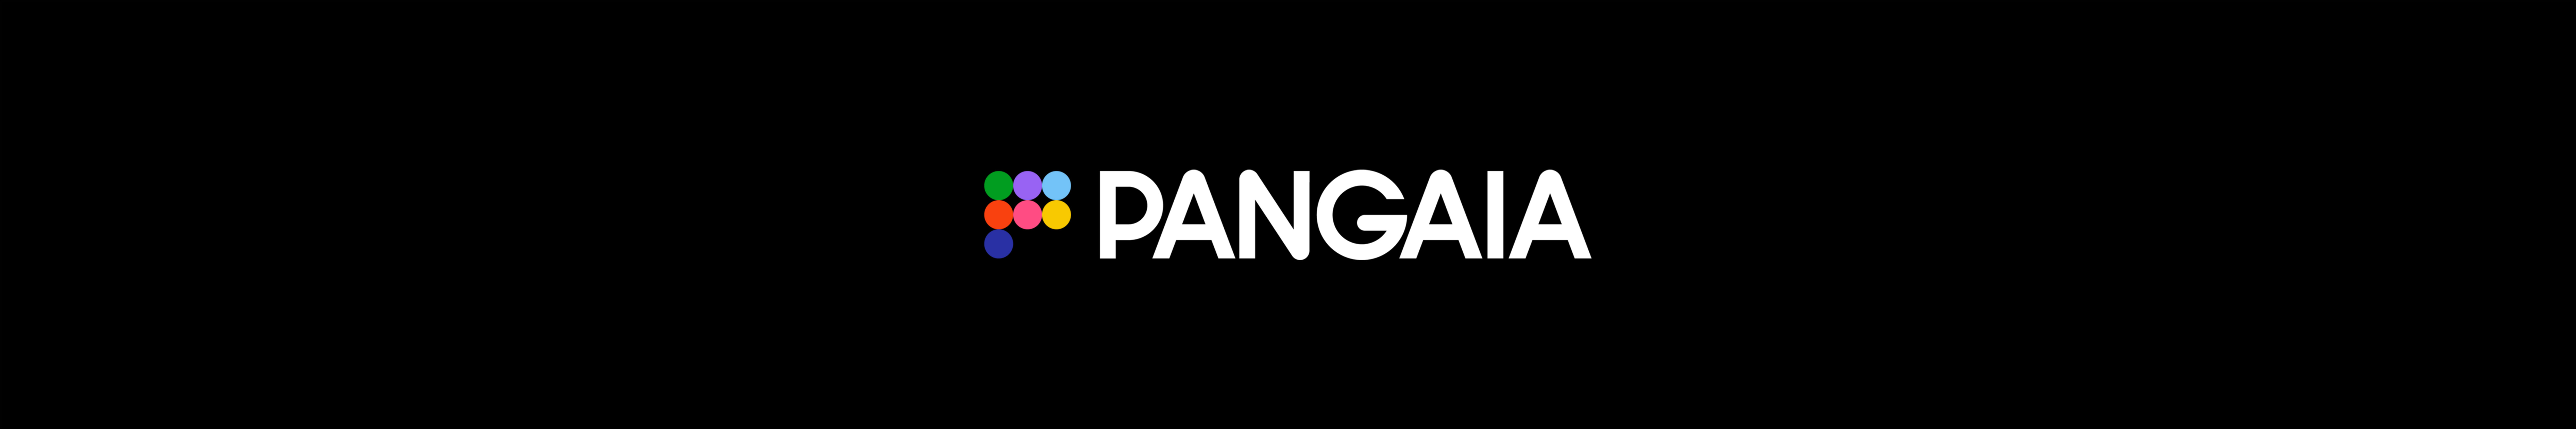 Pangaia-banner